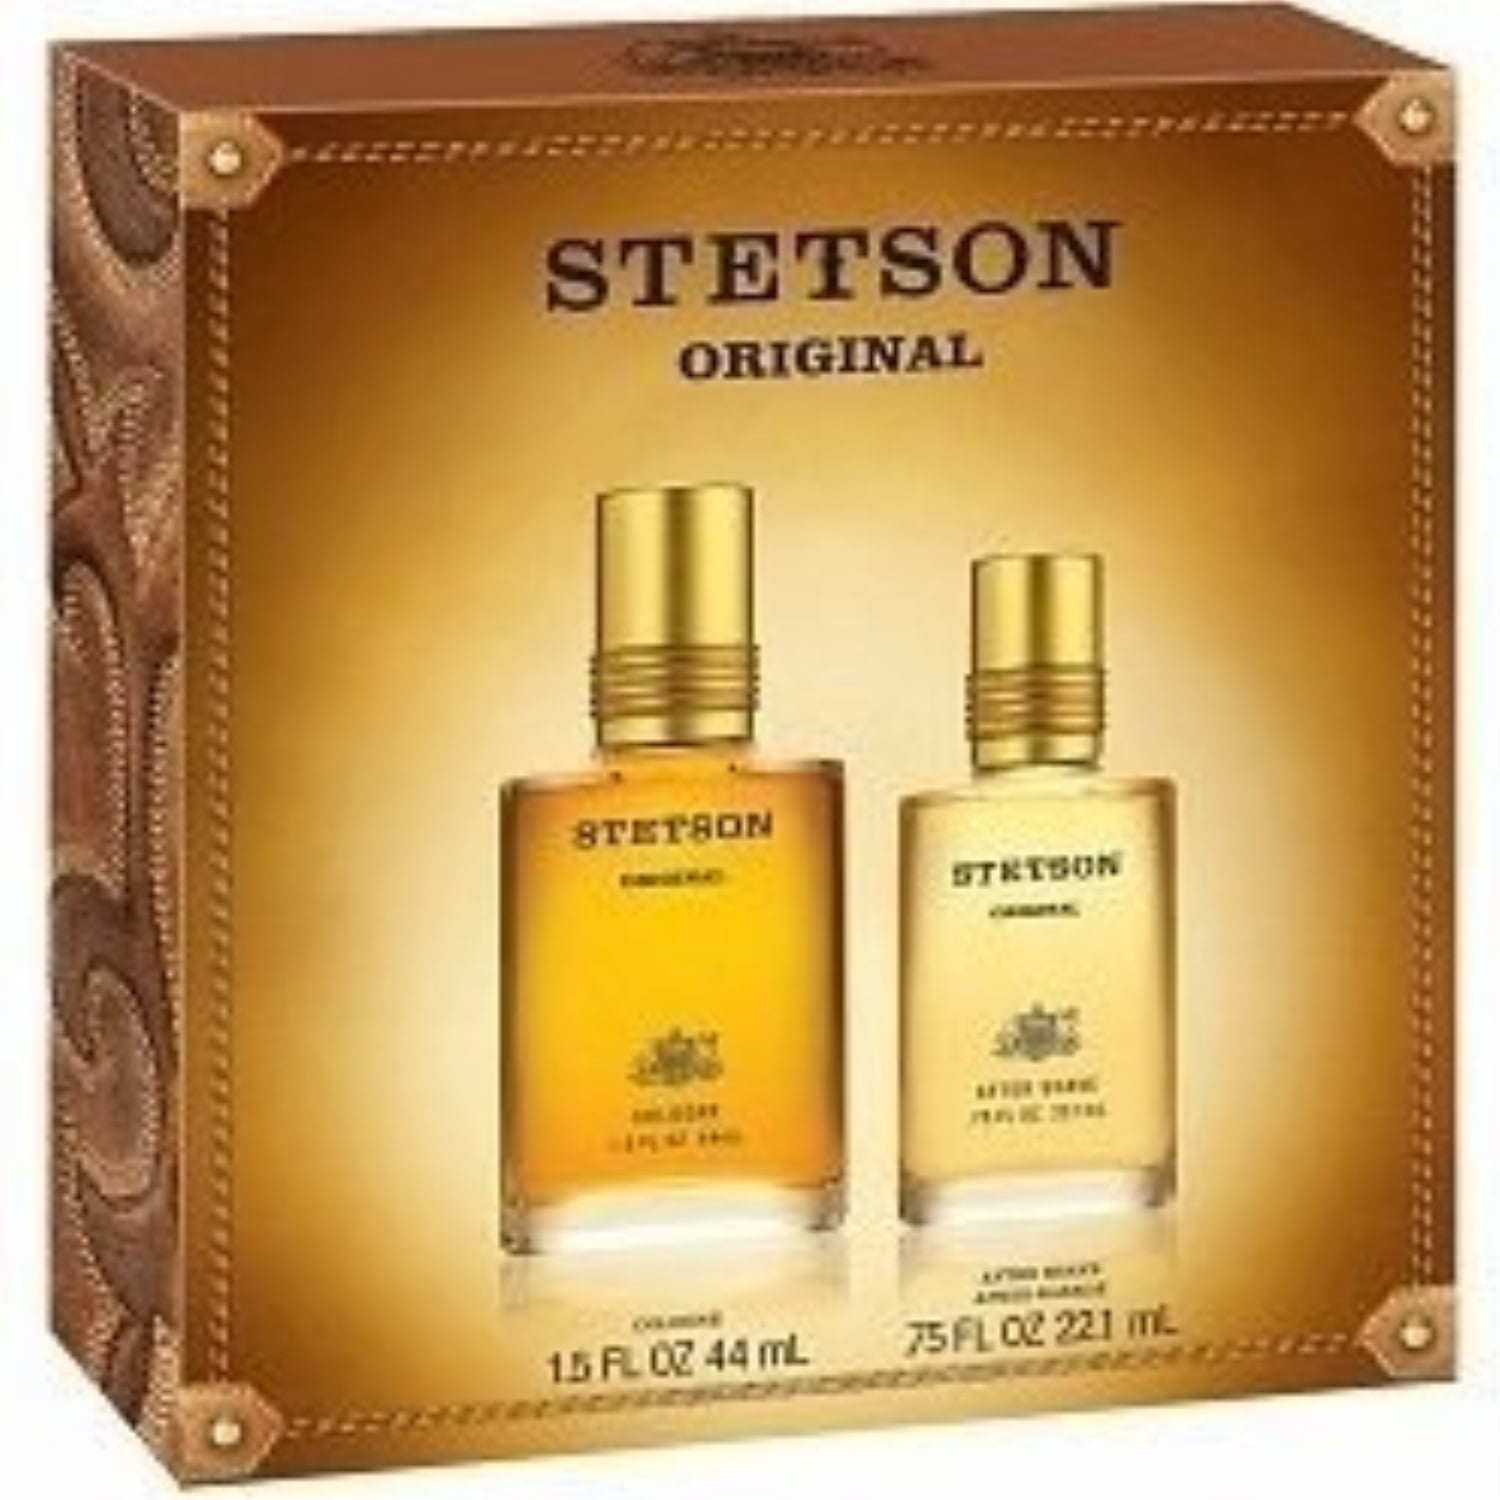 Stetson Original Mens Gift Set Cologne After Shave Oz Collectors | My ...